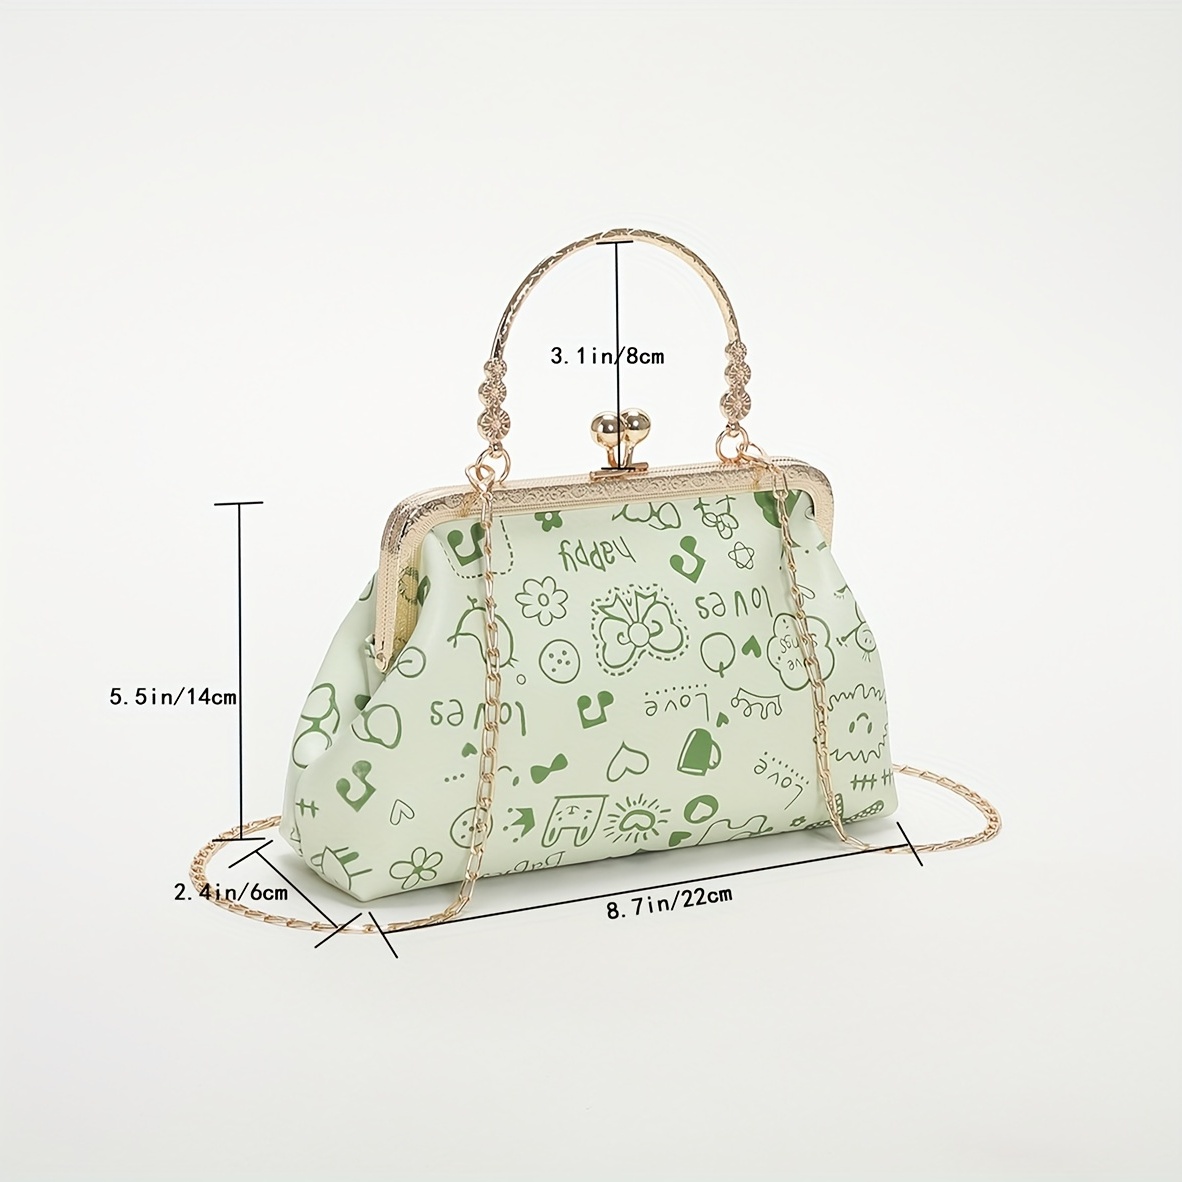 Handbag Dalmatian Louis Vuitton Leather for woman